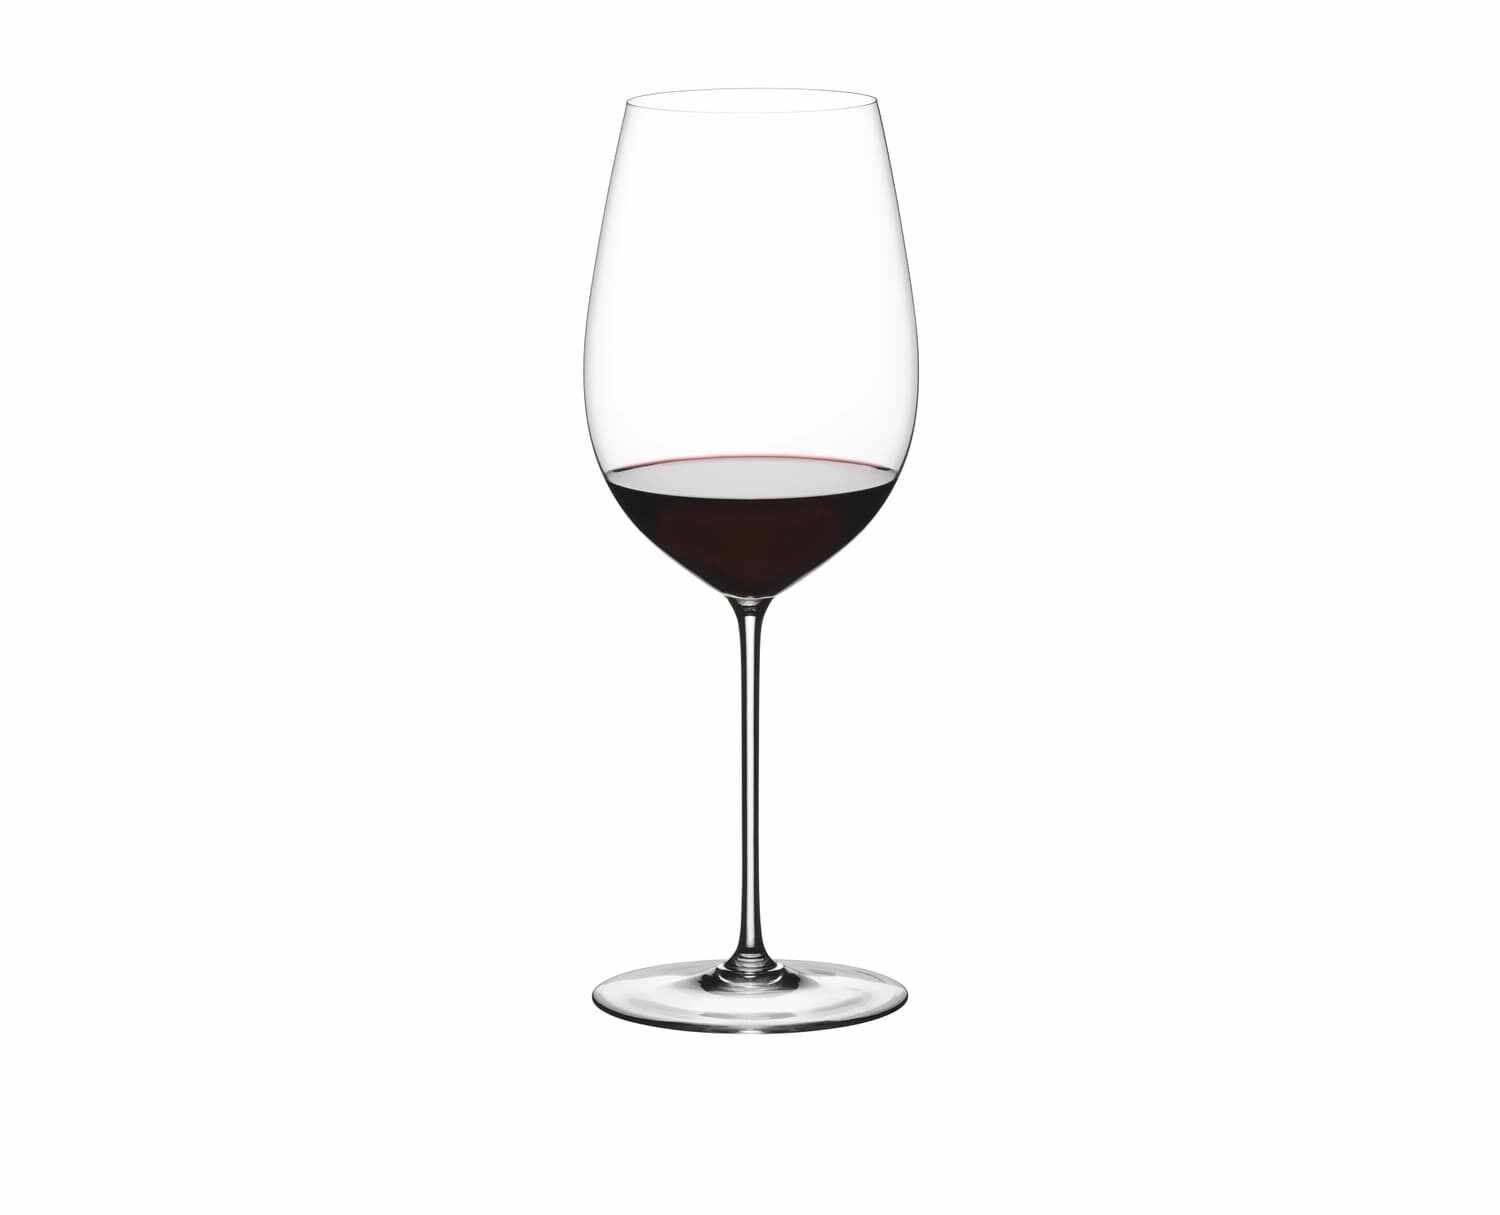 Pahar pentru vin, din cristal Superleggero Bordeaux Grand Cru Clear, 890 ml, Riedel